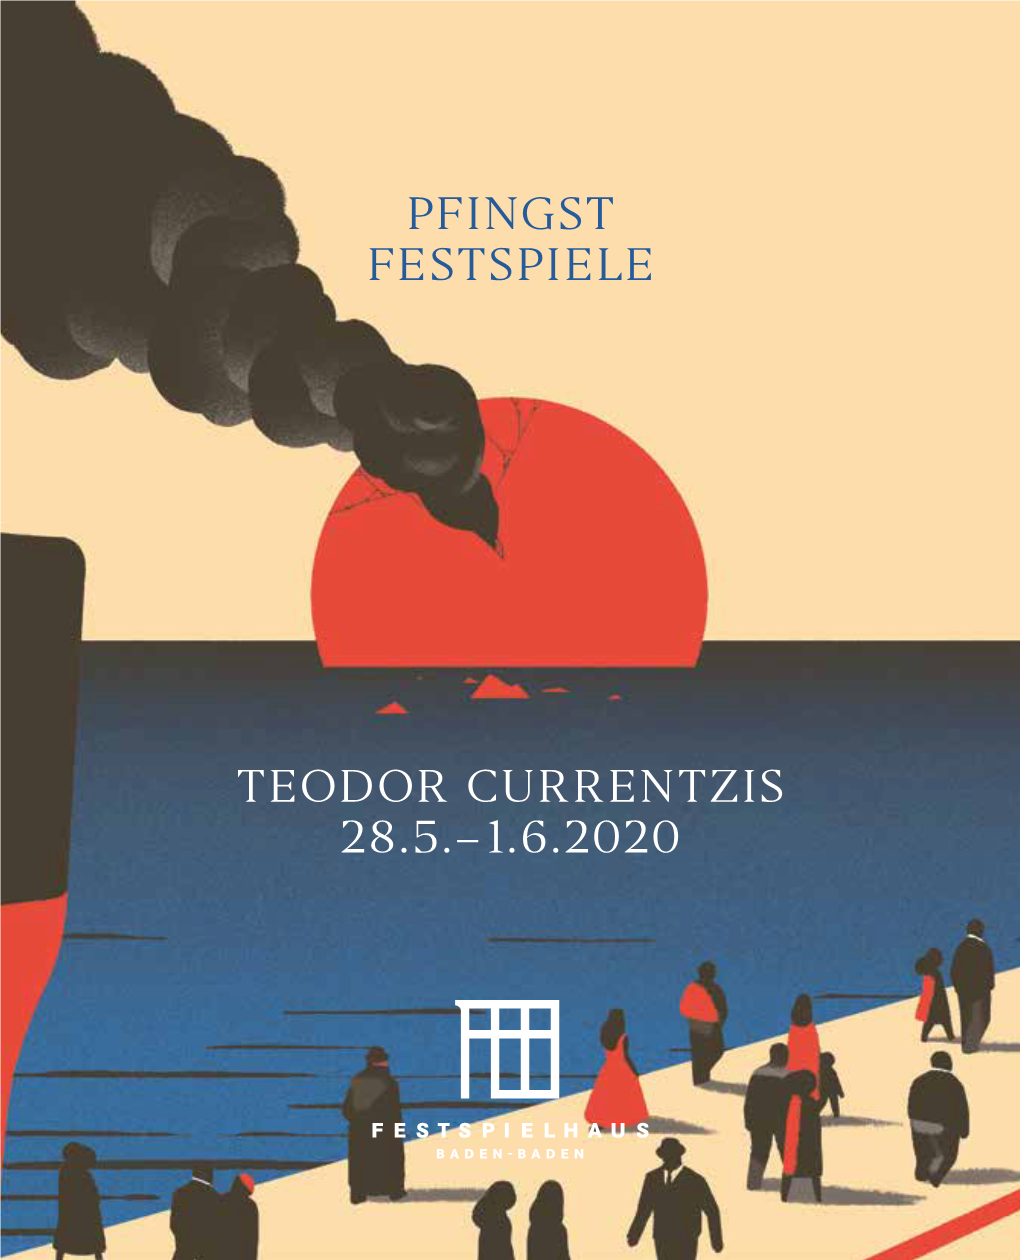 Pfingst Festspiele Teodor Currentzis 28.5.– 1.6.2020